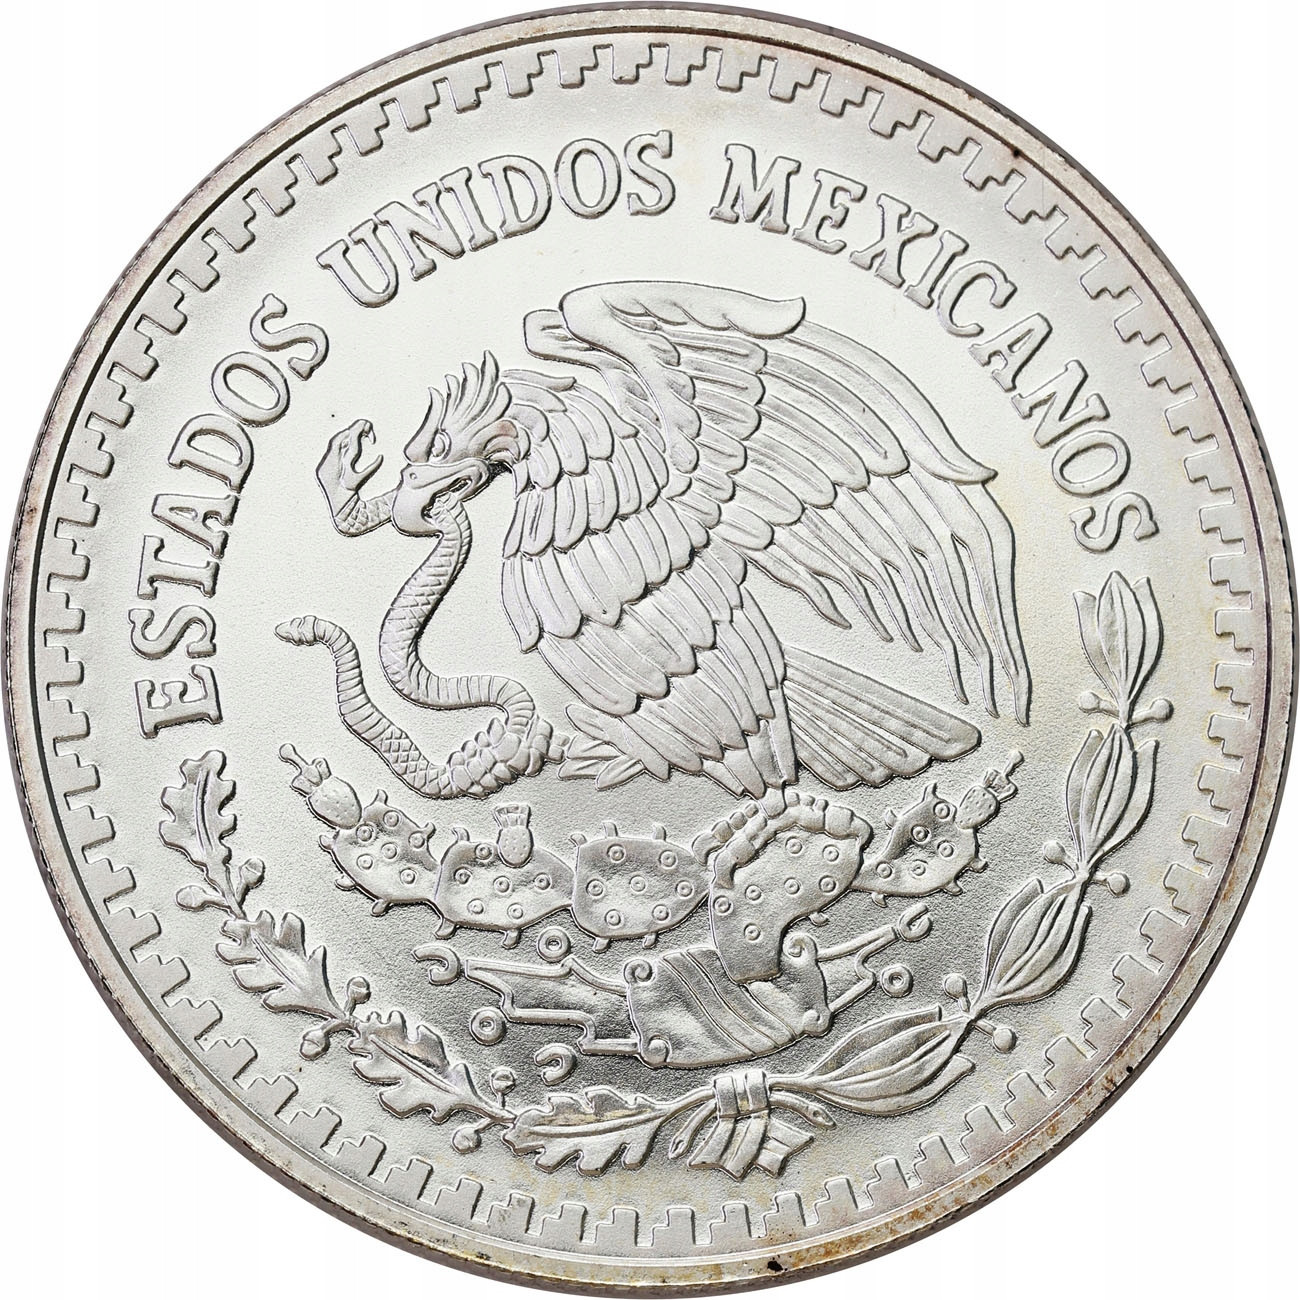 Meksyk. 1 onza 2016 - 1 uncja SREBRA